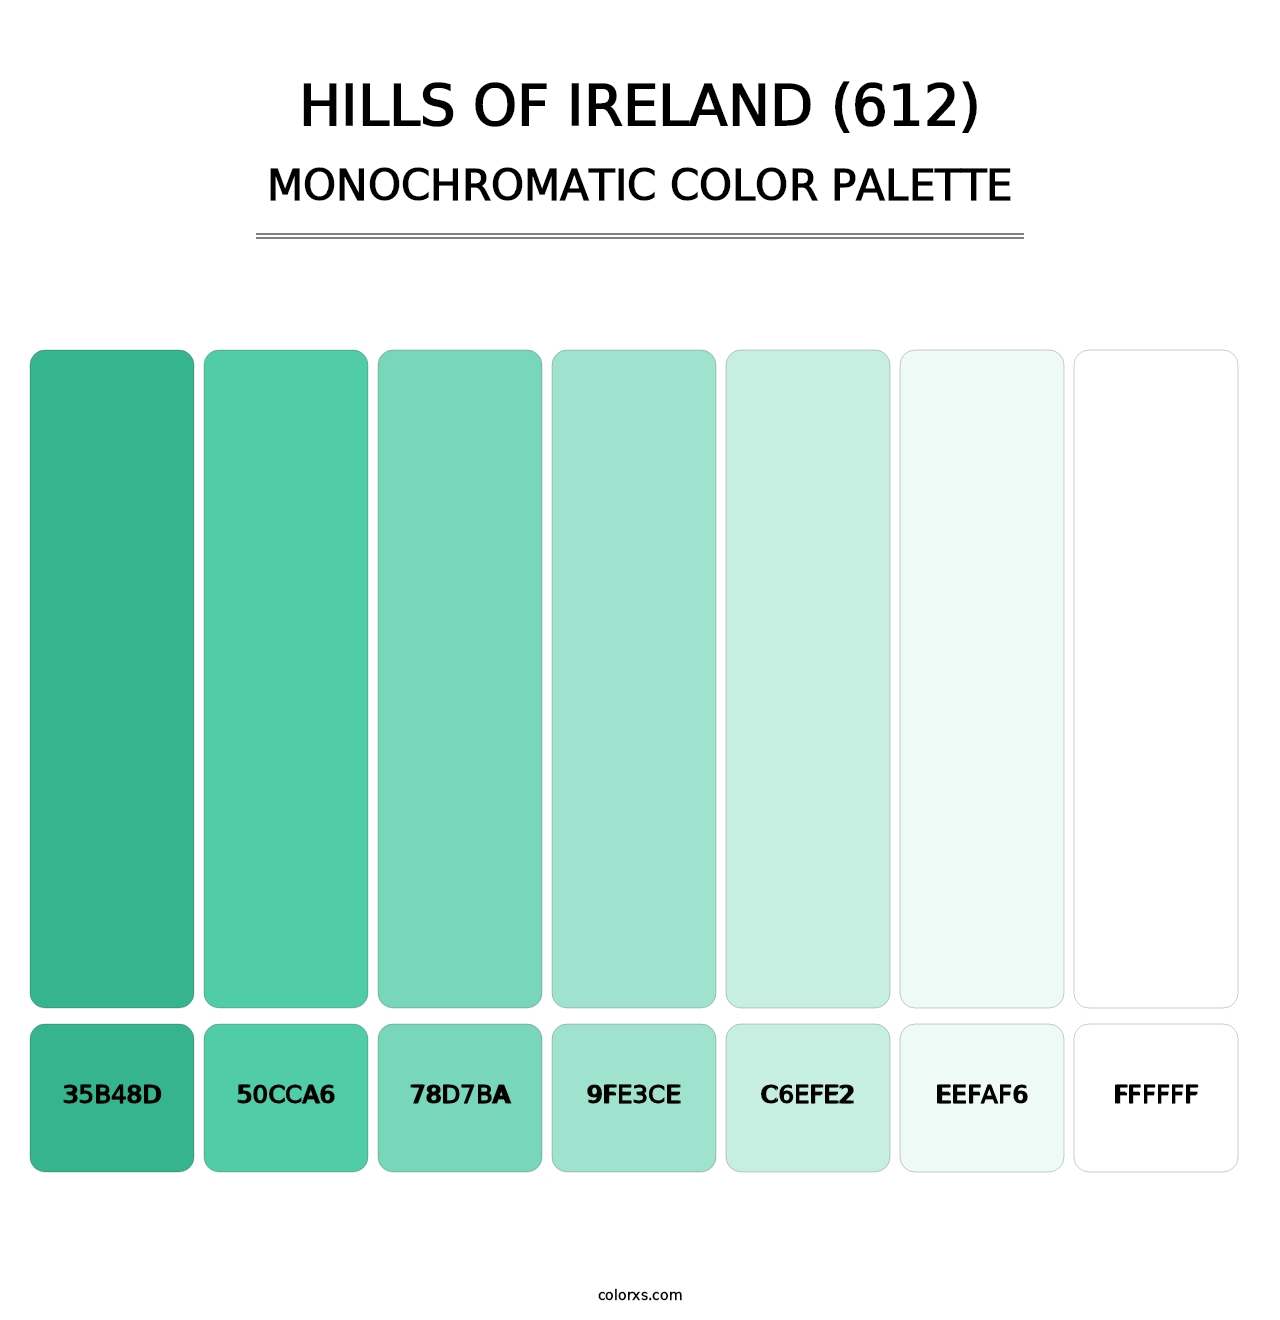 Hills of Ireland (612) - Monochromatic Color Palette